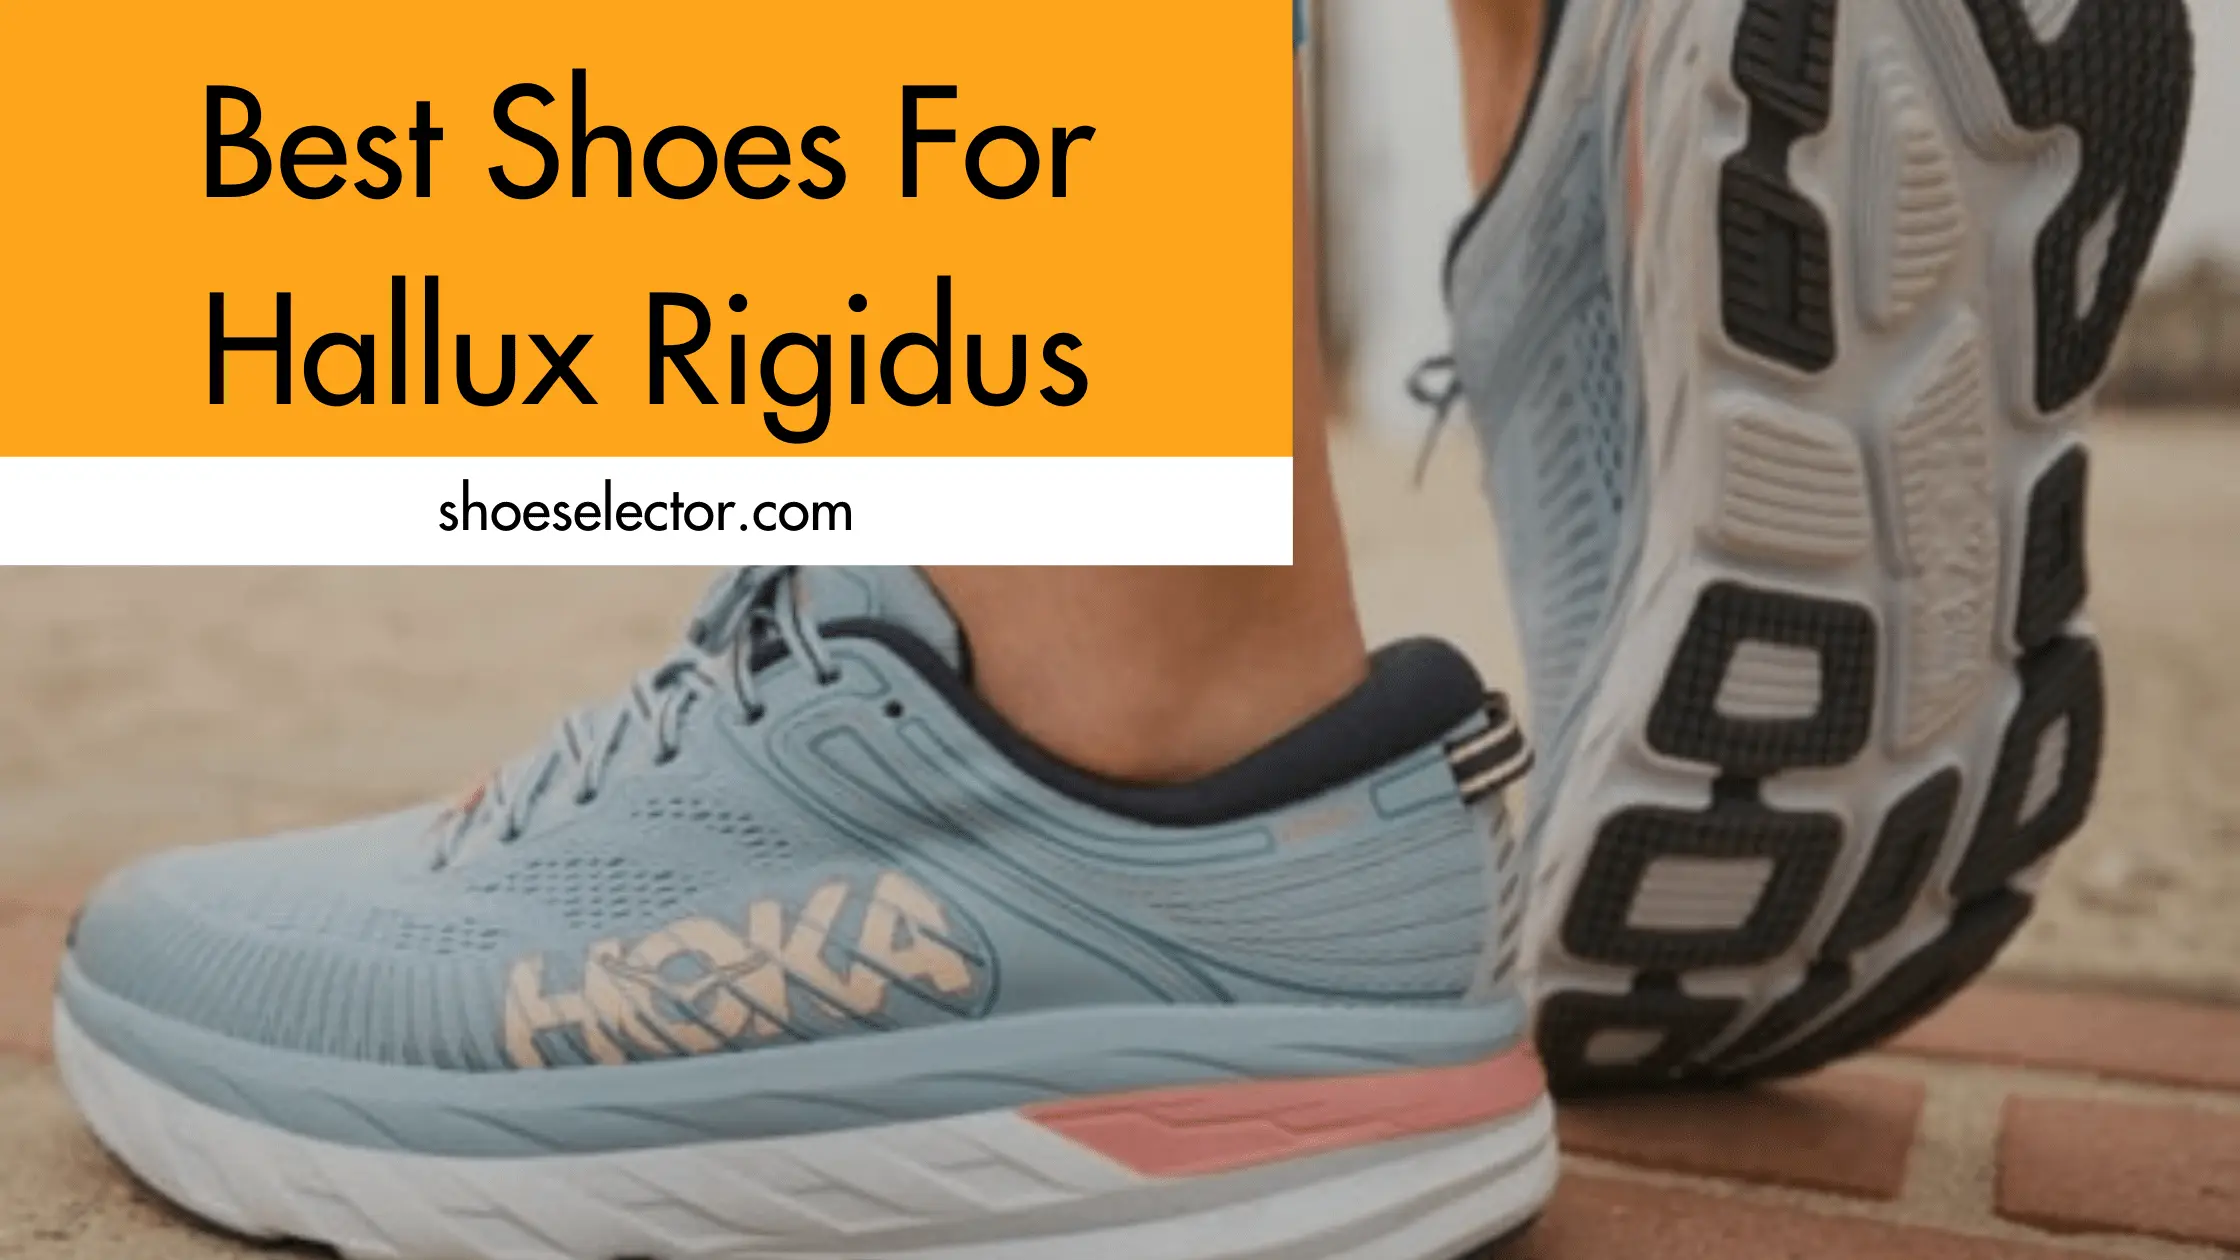 Best Shoes For Hallux Rigidus - Complete Guide